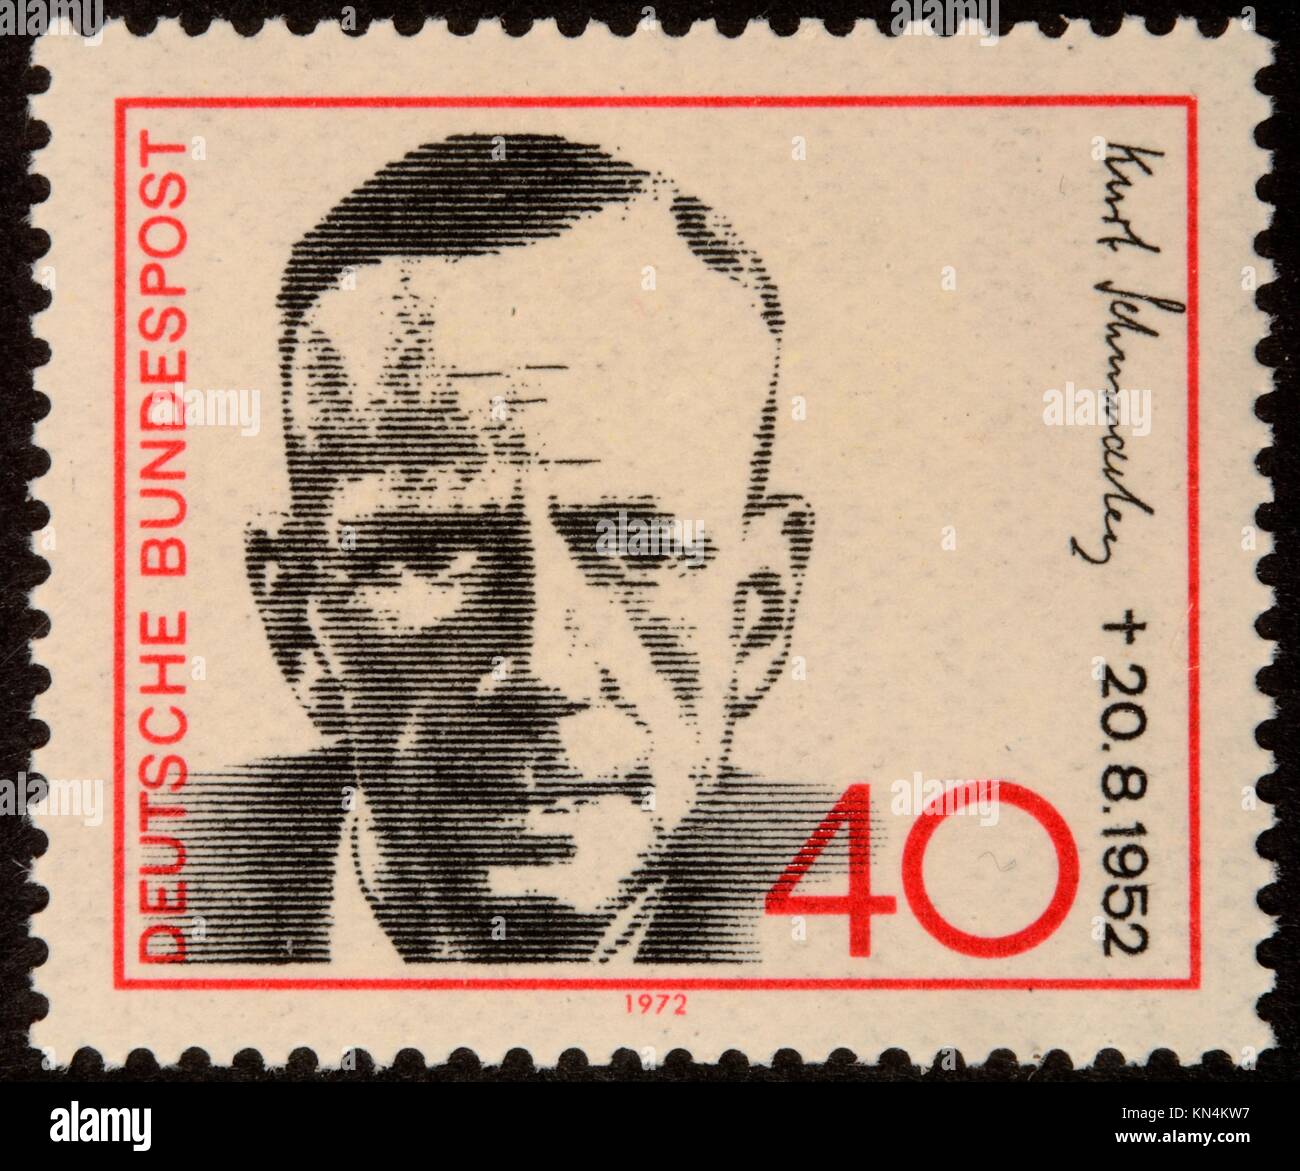 Kurt Ernst Carl Schumacher, a German social democratic politician, portrait on a German (FRG) stamp 1972 Stock Photo